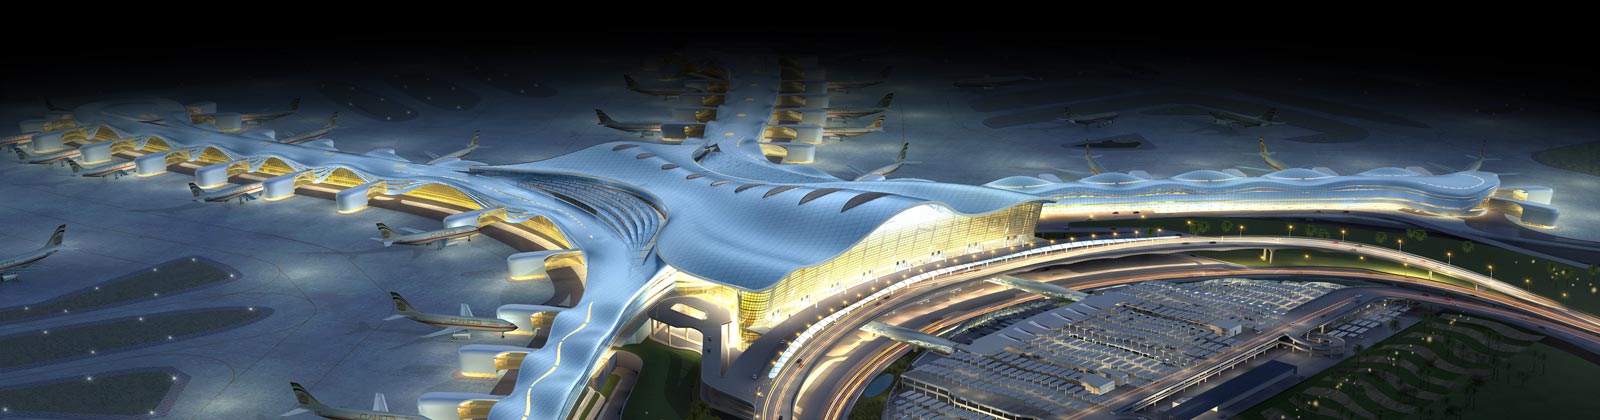 Abu Dhabi Terminal View